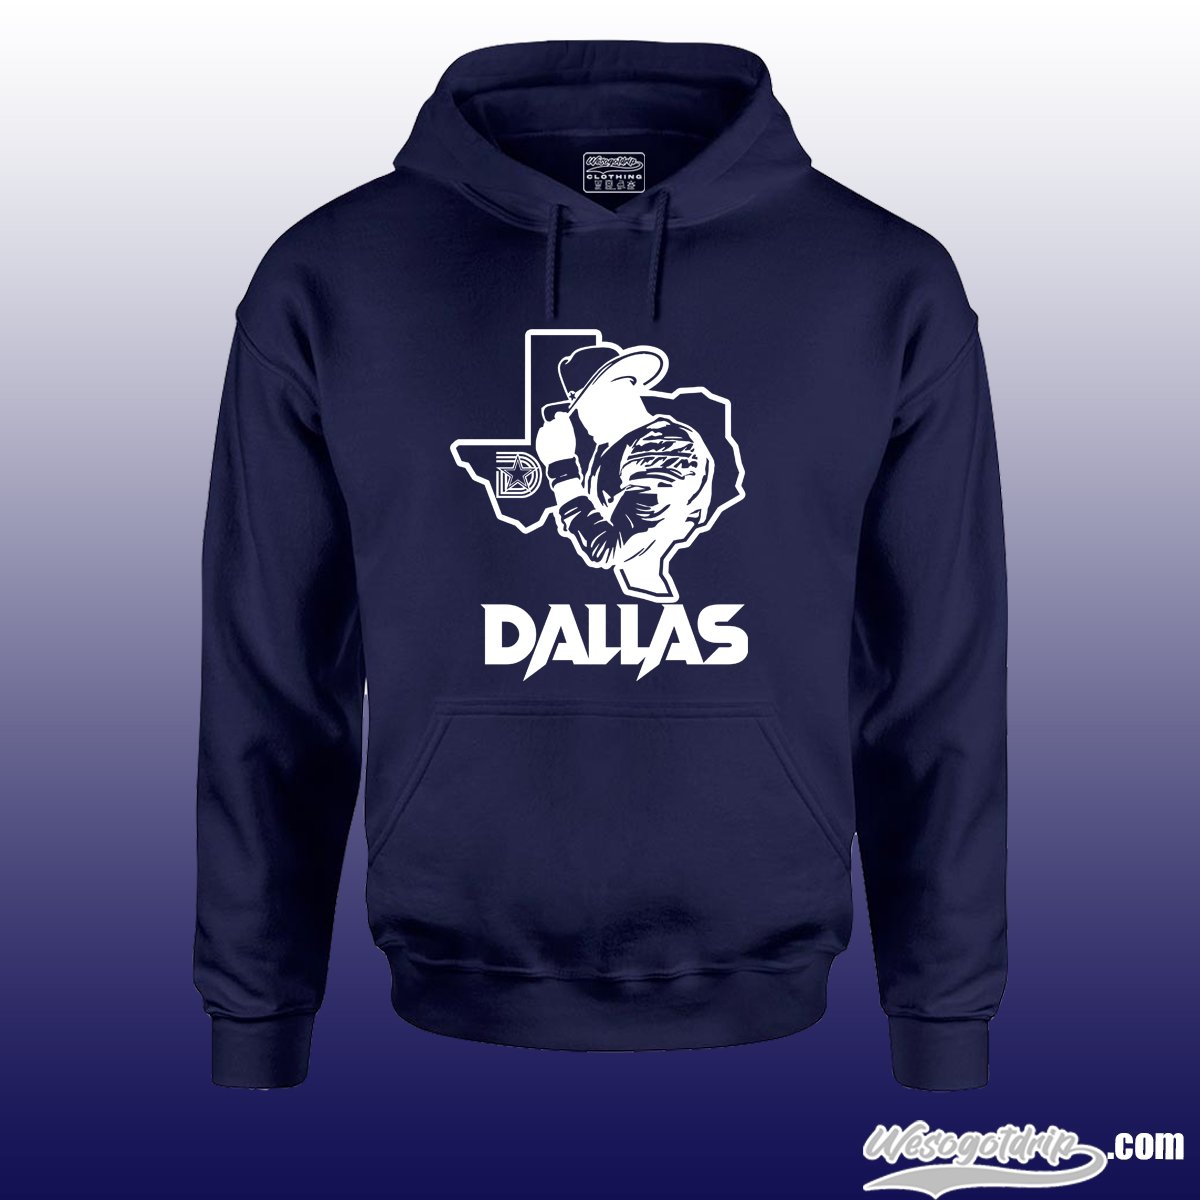 Dallas Cowboys Hoodie Dak Prescott (Mens)